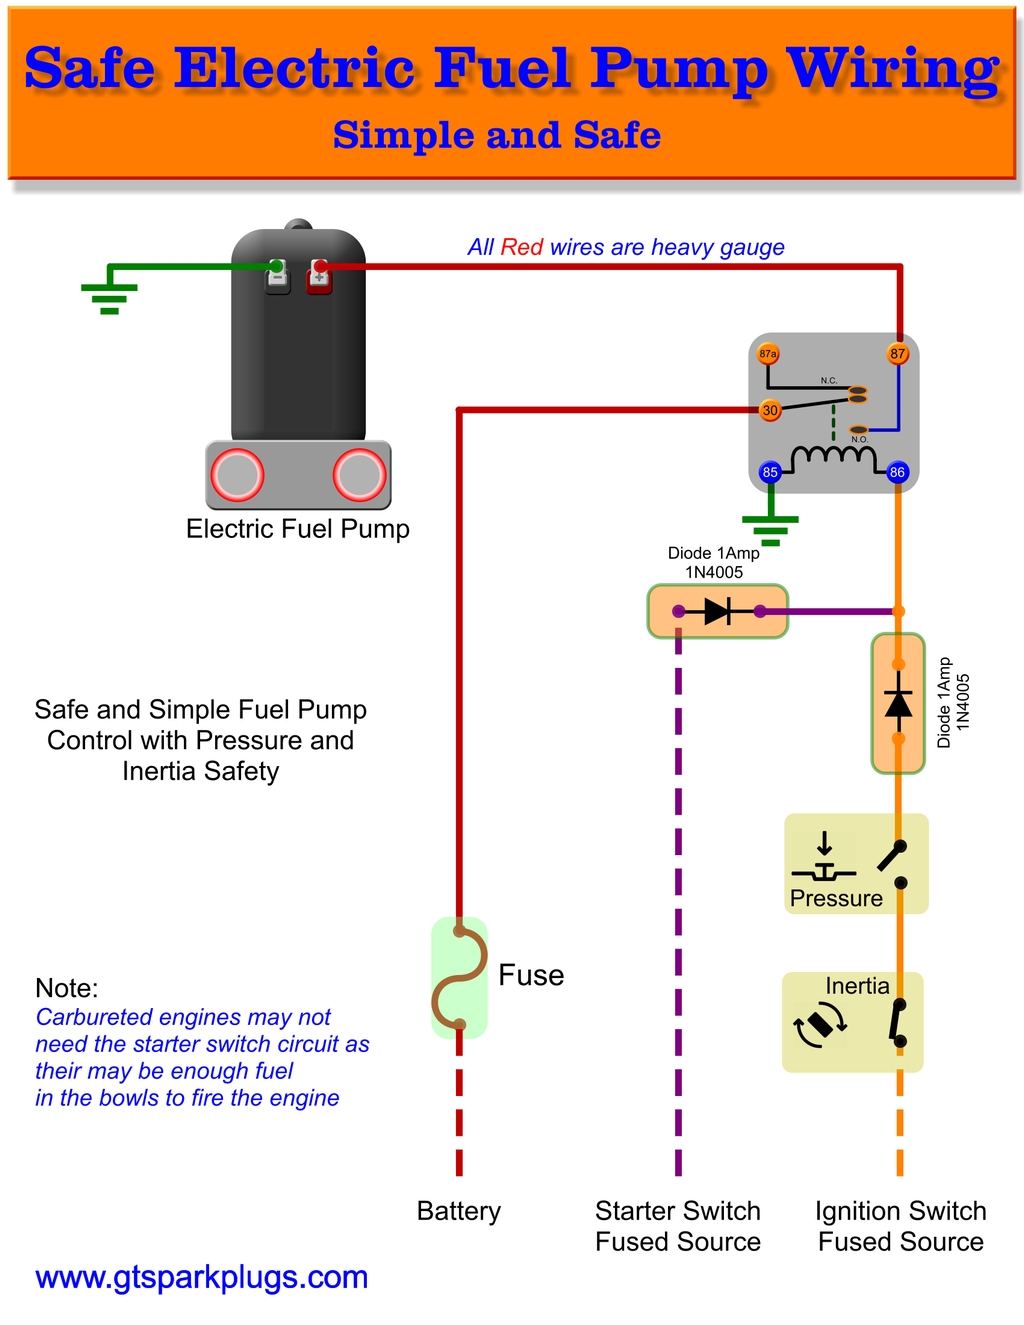 Basic Safe Electric Fuel Pump Wiring